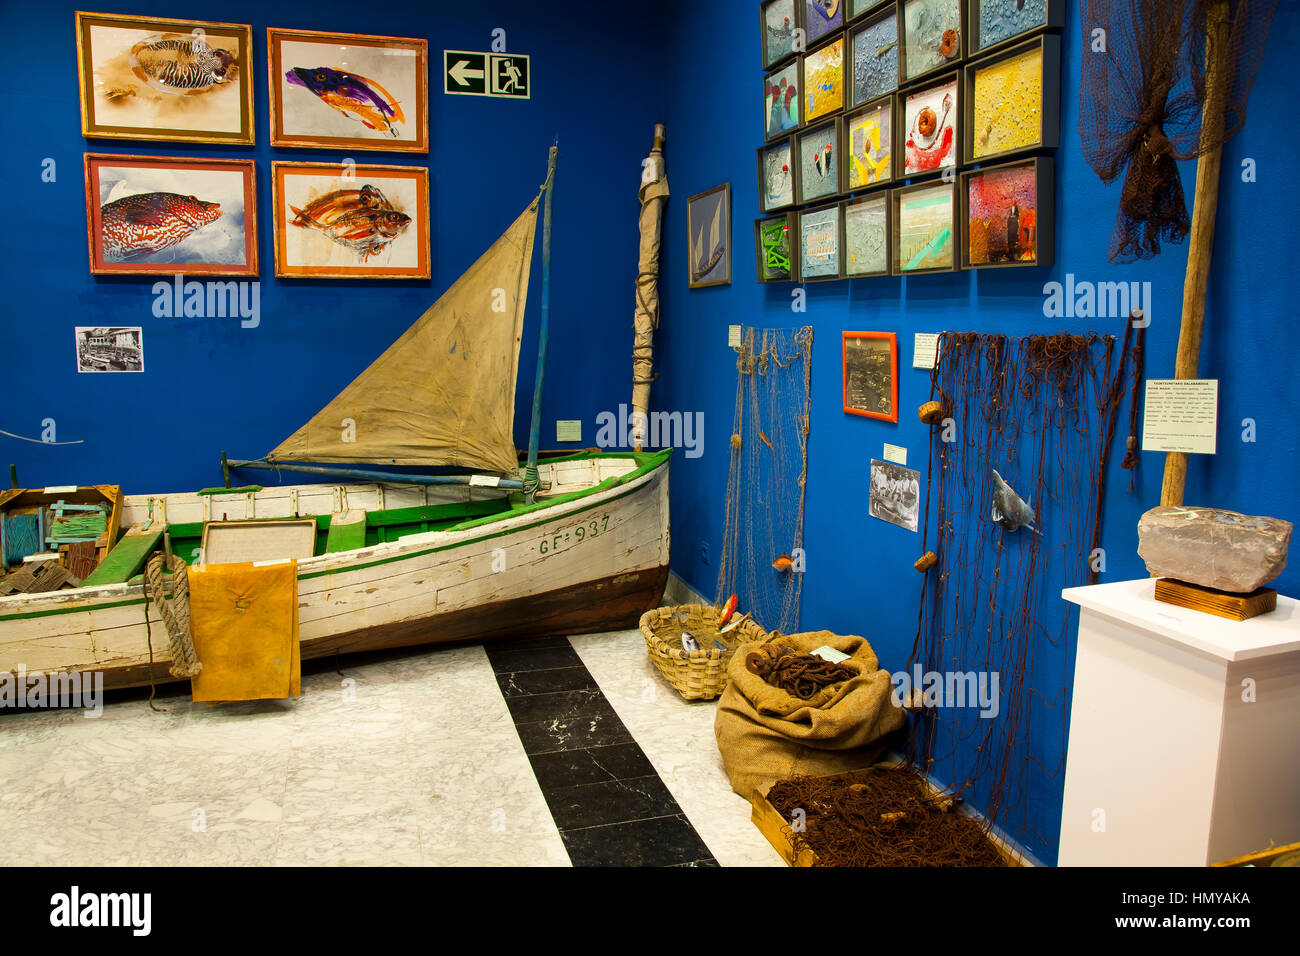 Fish and sea showroom. Tourism and information bureau. Stock Photo